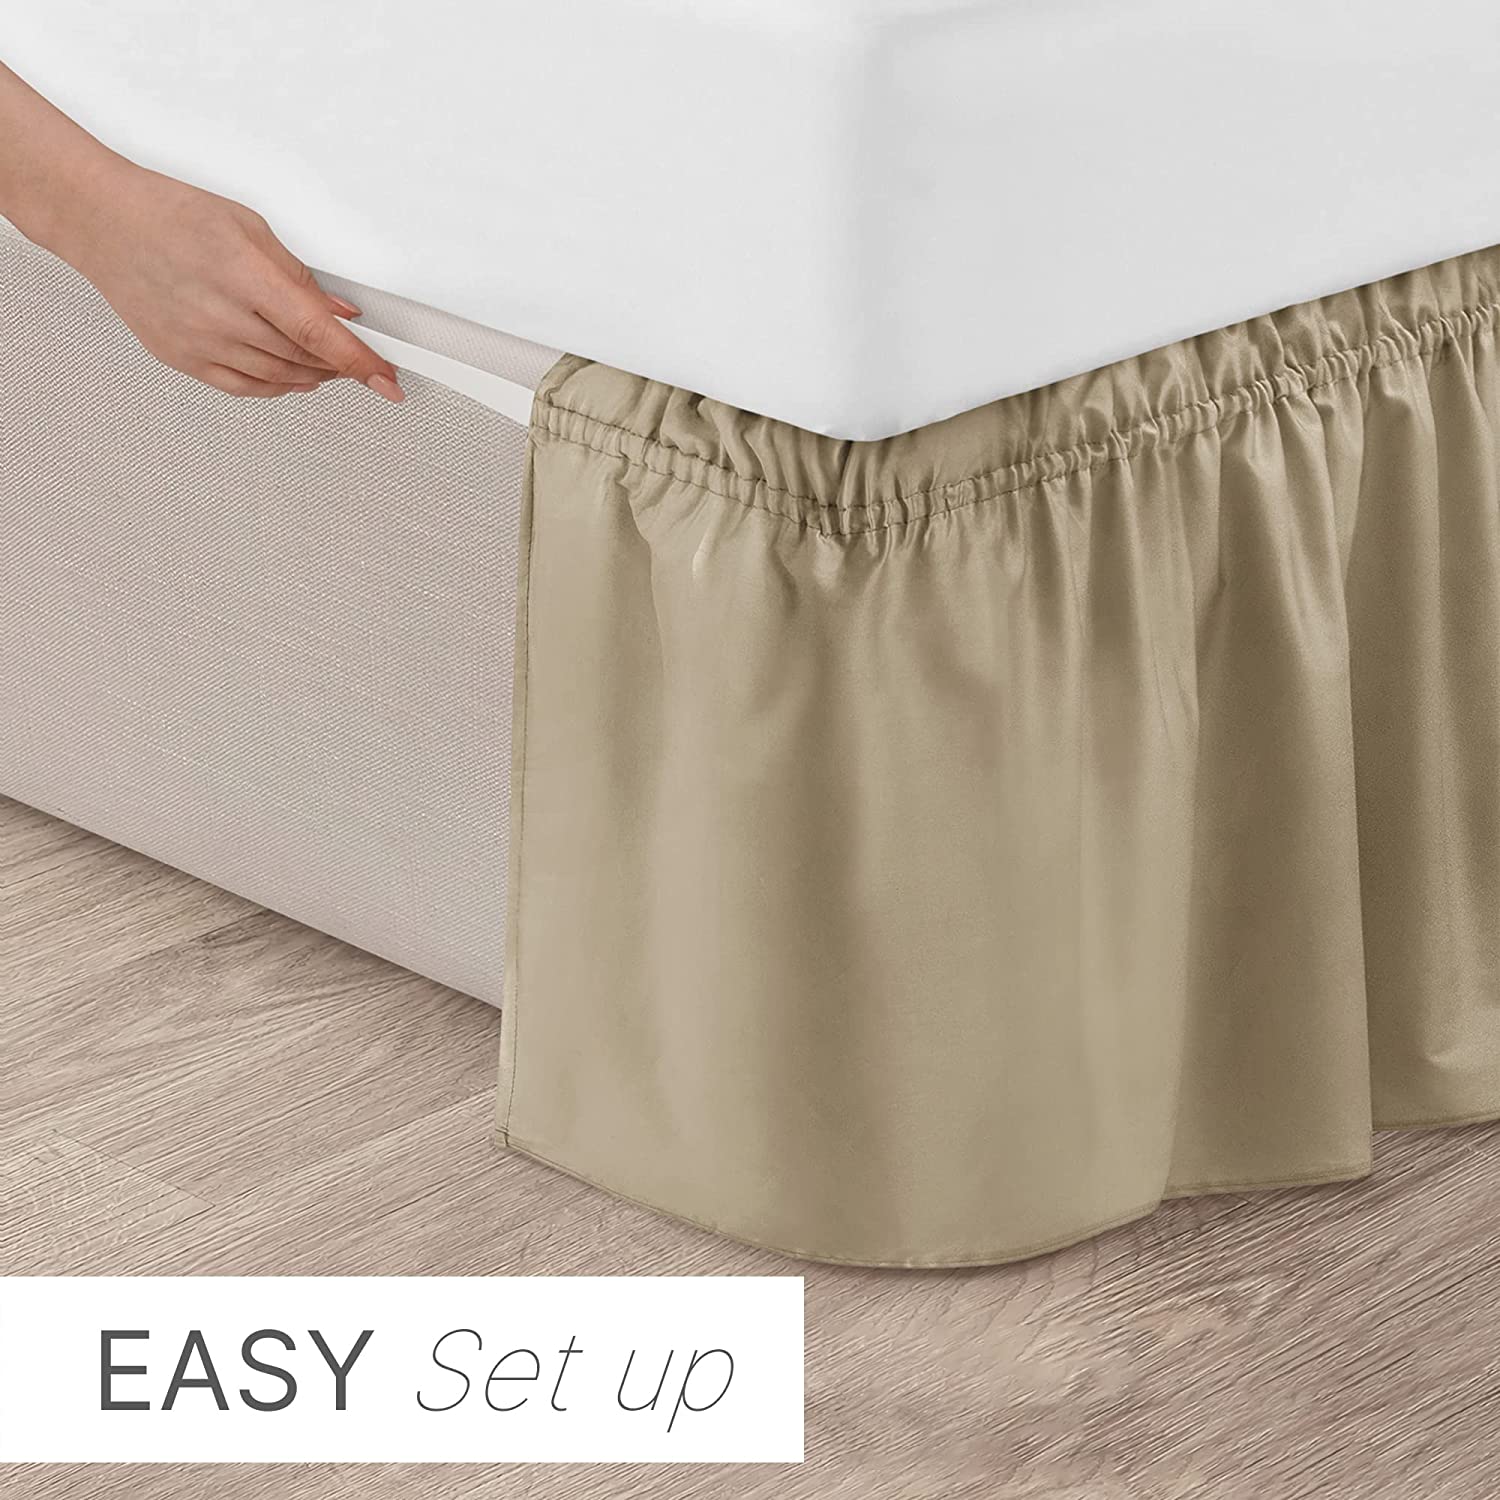 Ruffled Elastic Wrap Around Bedskirt 15 Inch Drop - Beige